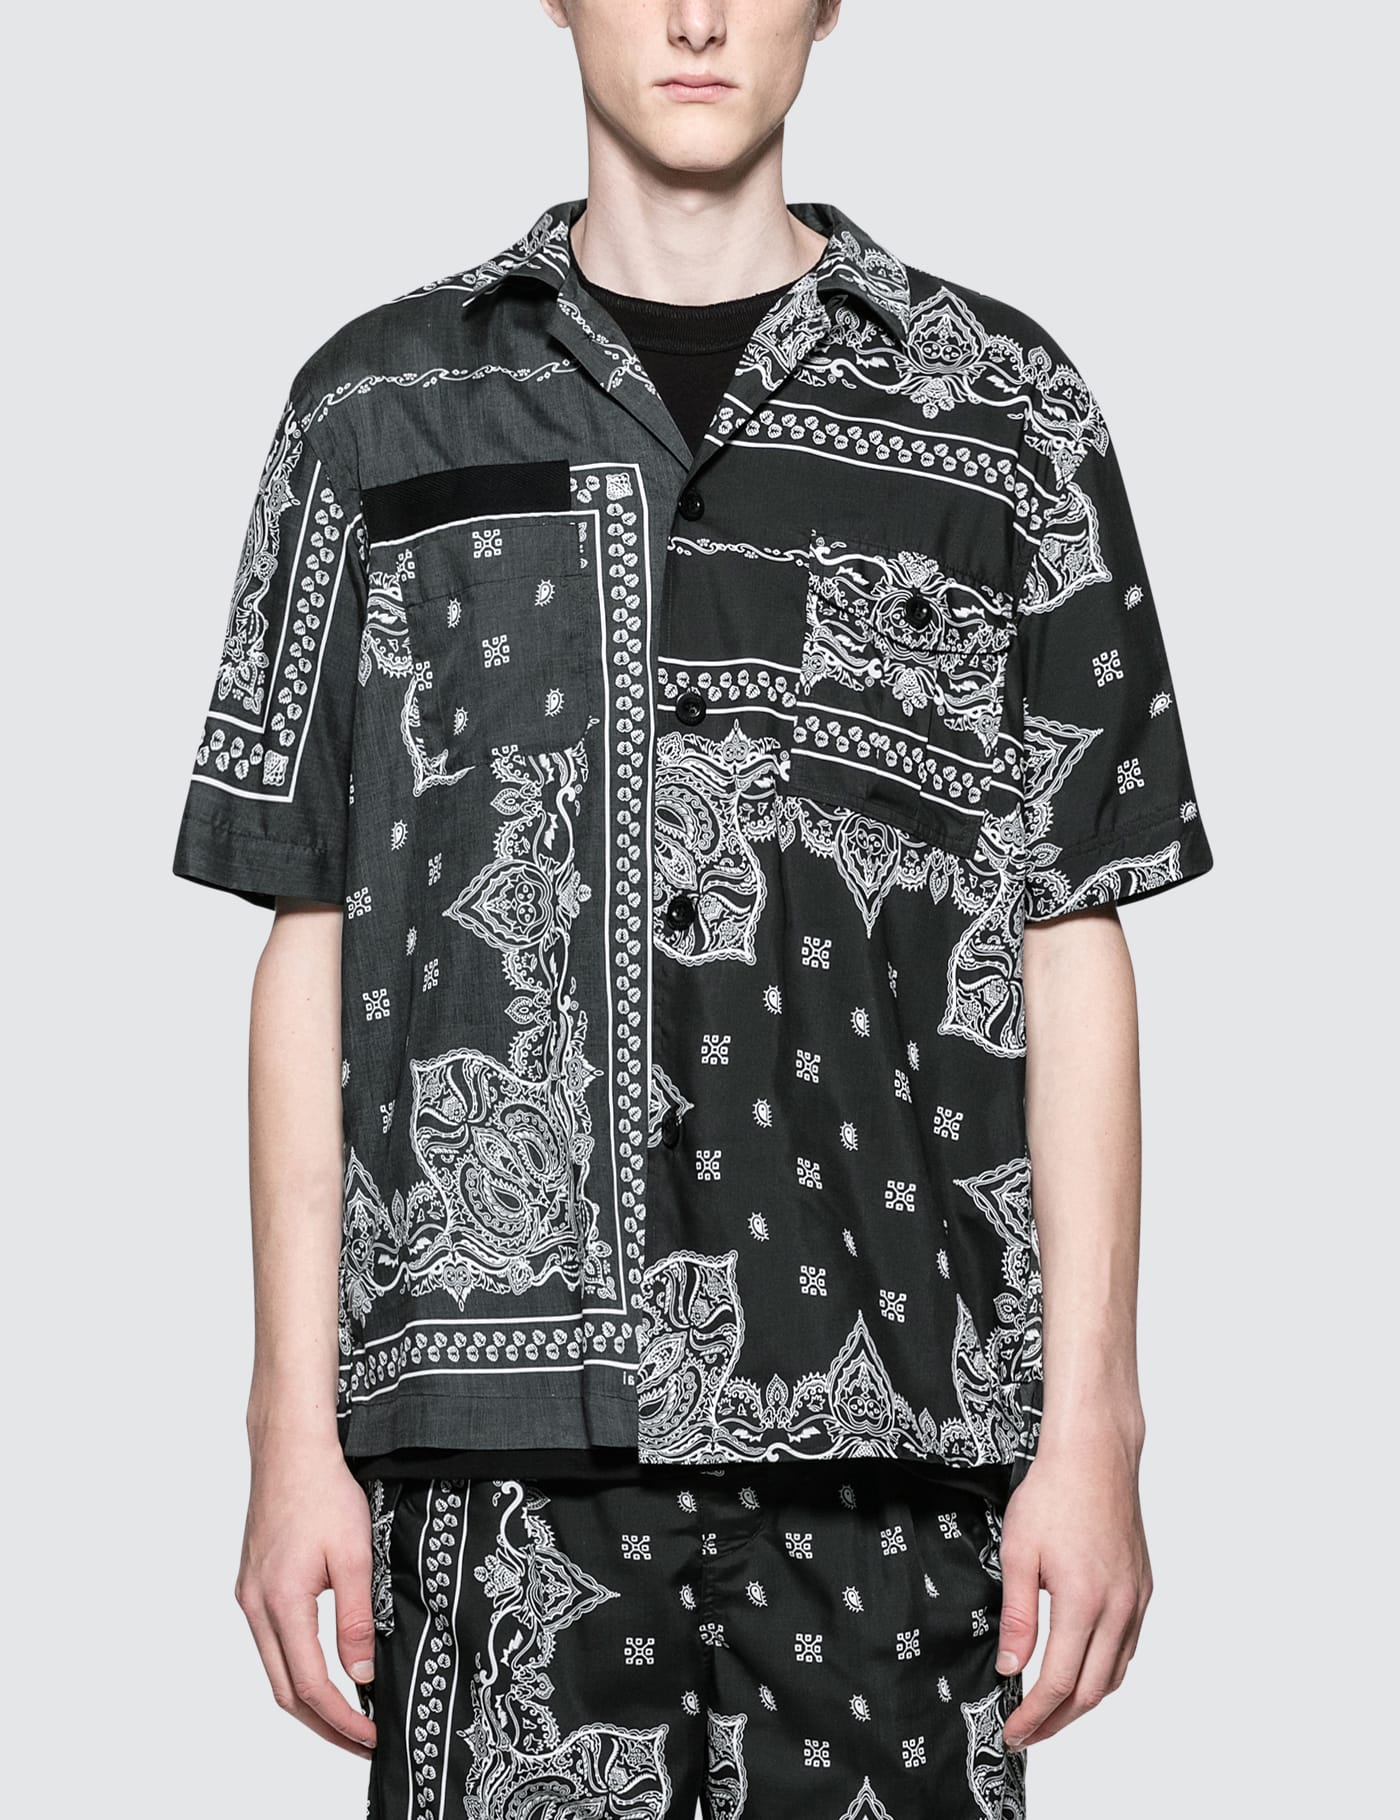 Sacai - Bandana Print Shirt | HBX - Globally Curated Fashion and 